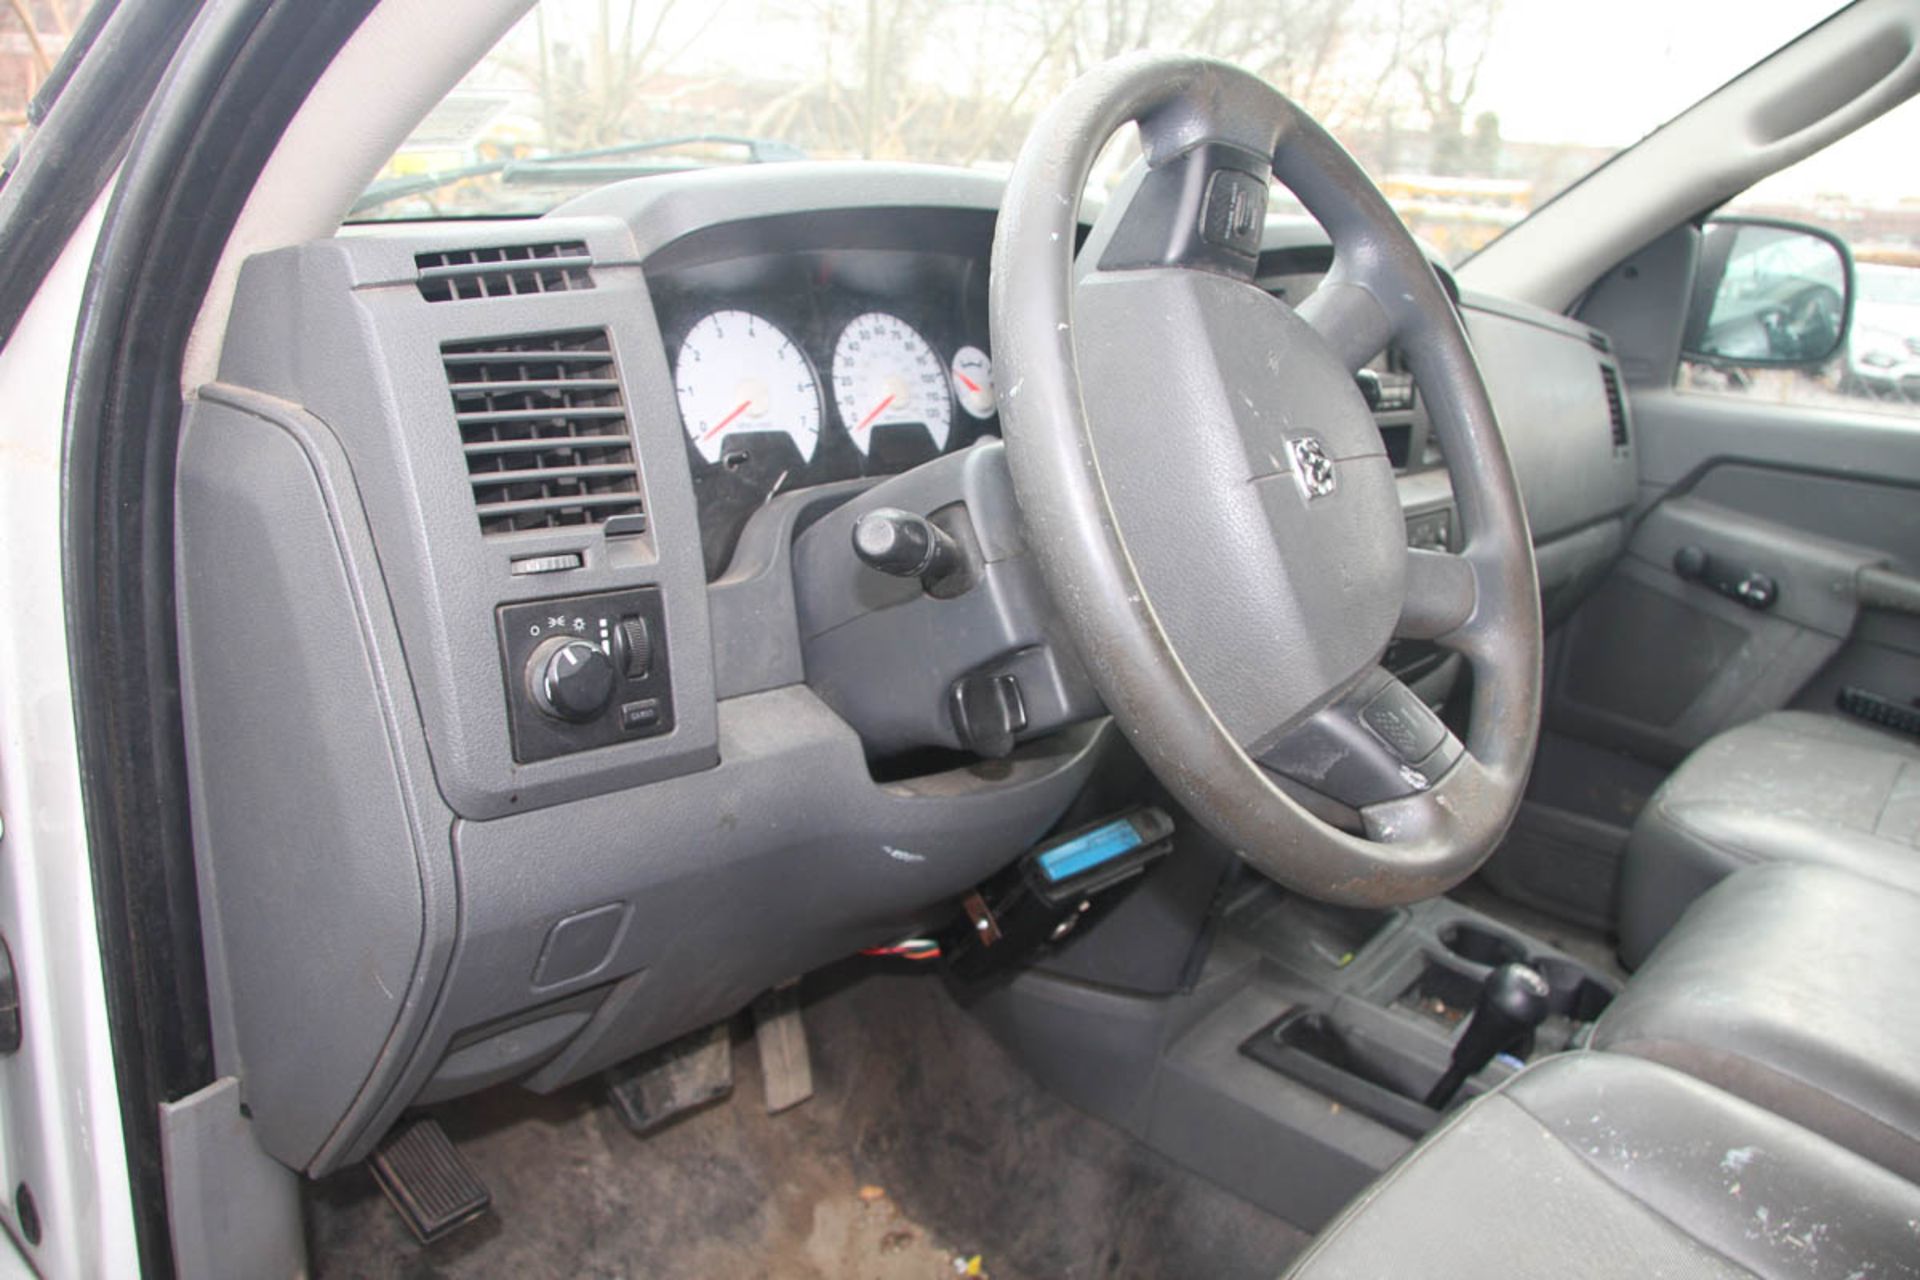 2008 DODGE RAM 2500HD 4-DOOR PICKUP TRUCK, 8' BED, 4-WHEEL DRIVE, AUTOMATIC TRANSMISSION, 5.7L V8 - Image 11 of 15